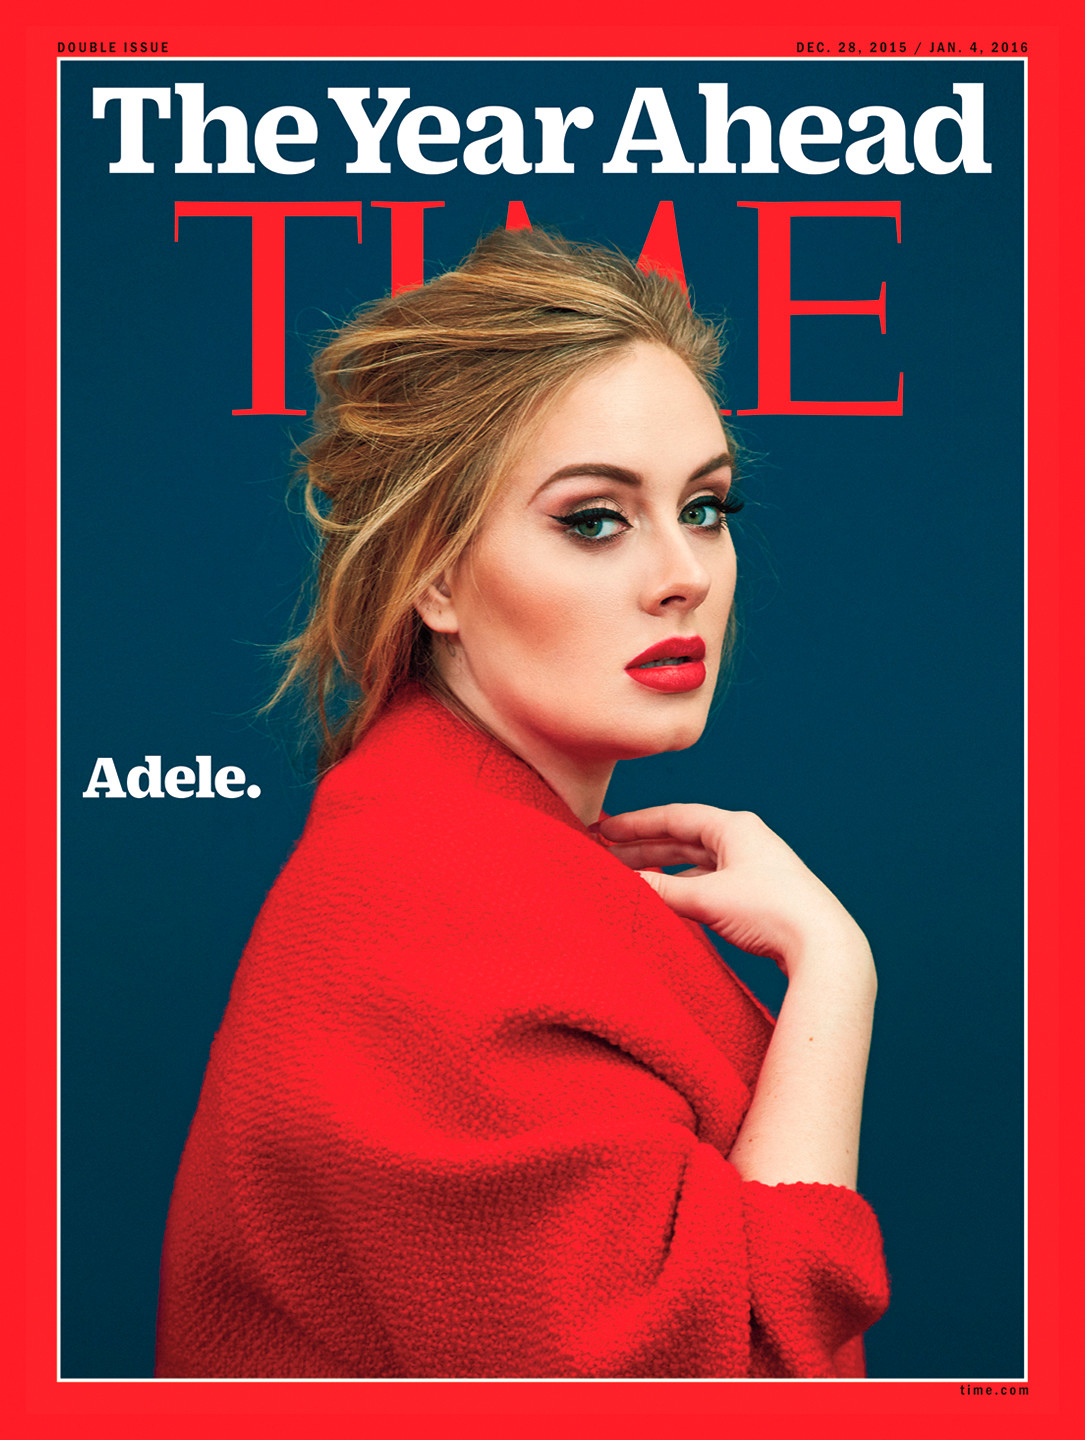 TIME Magazine